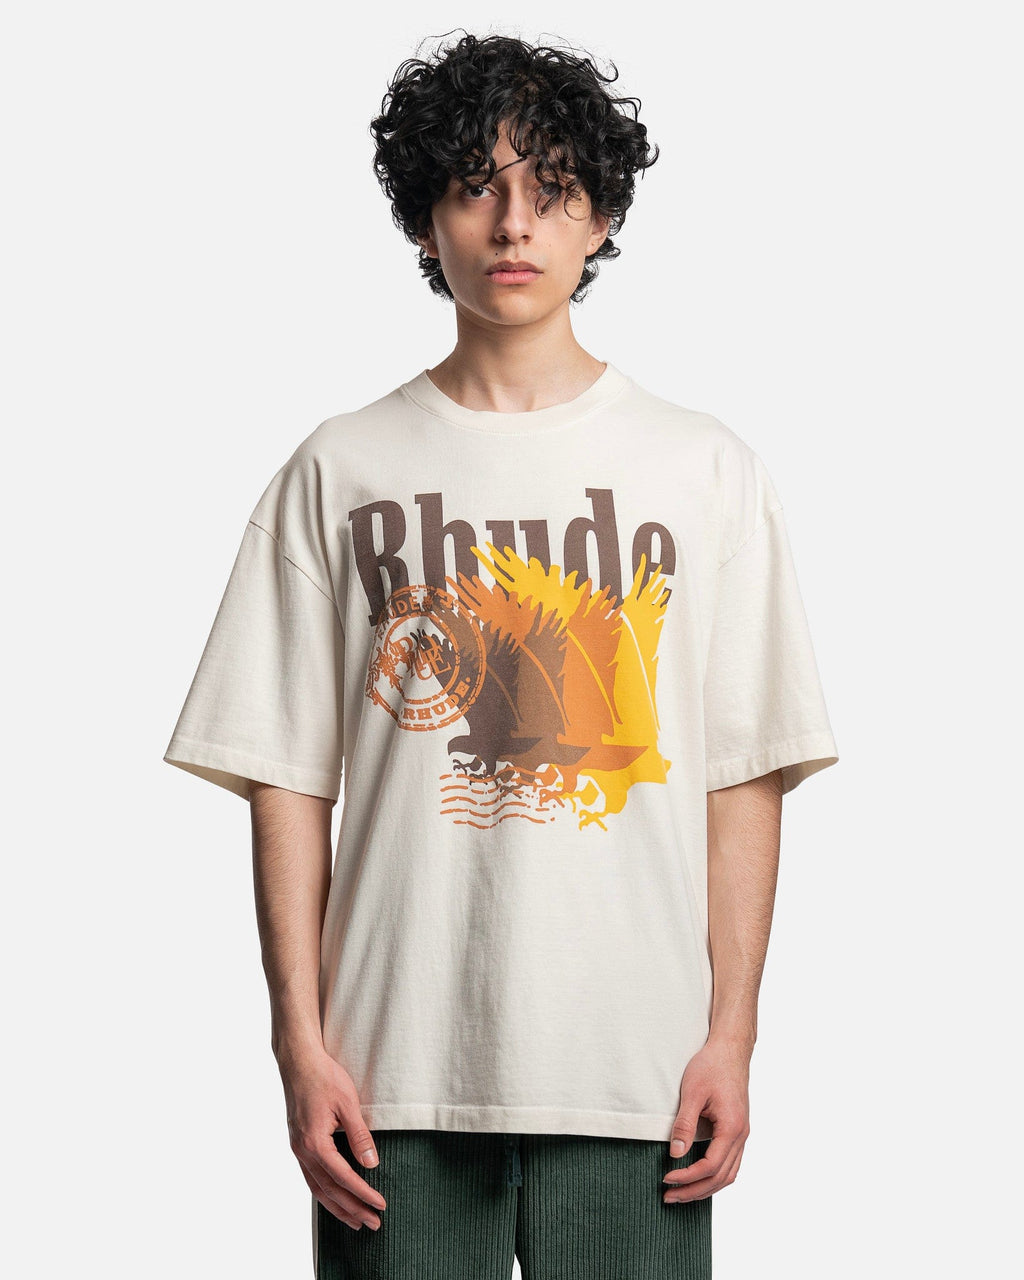 RHUDE Texas shirt T-Pablow今人気のストリートブランドです - トップス